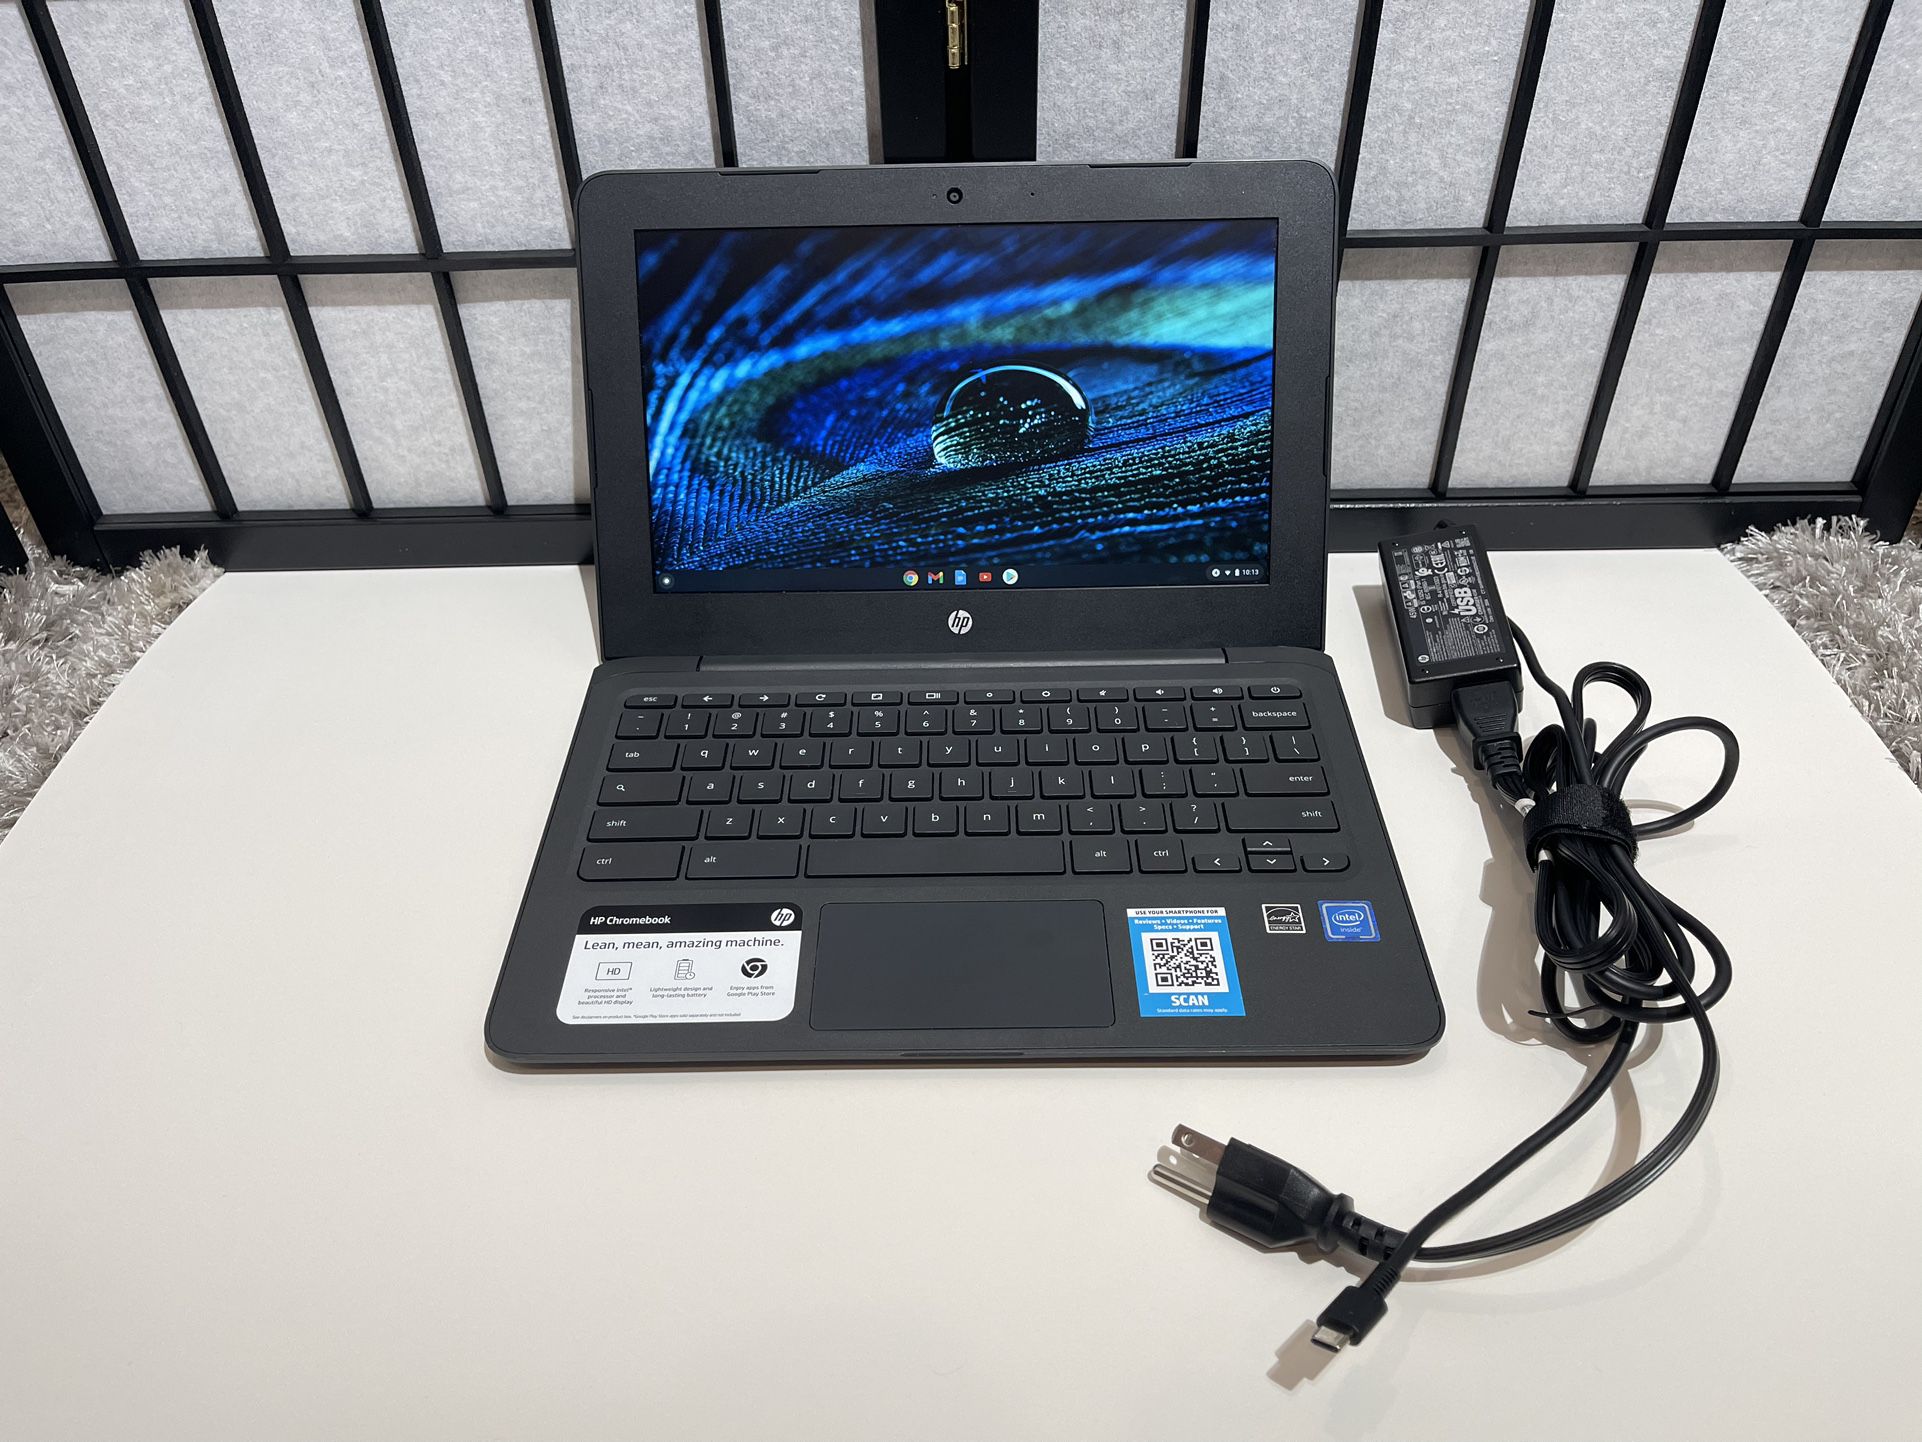 Chromebook HP Model: 11a-nb0013dx